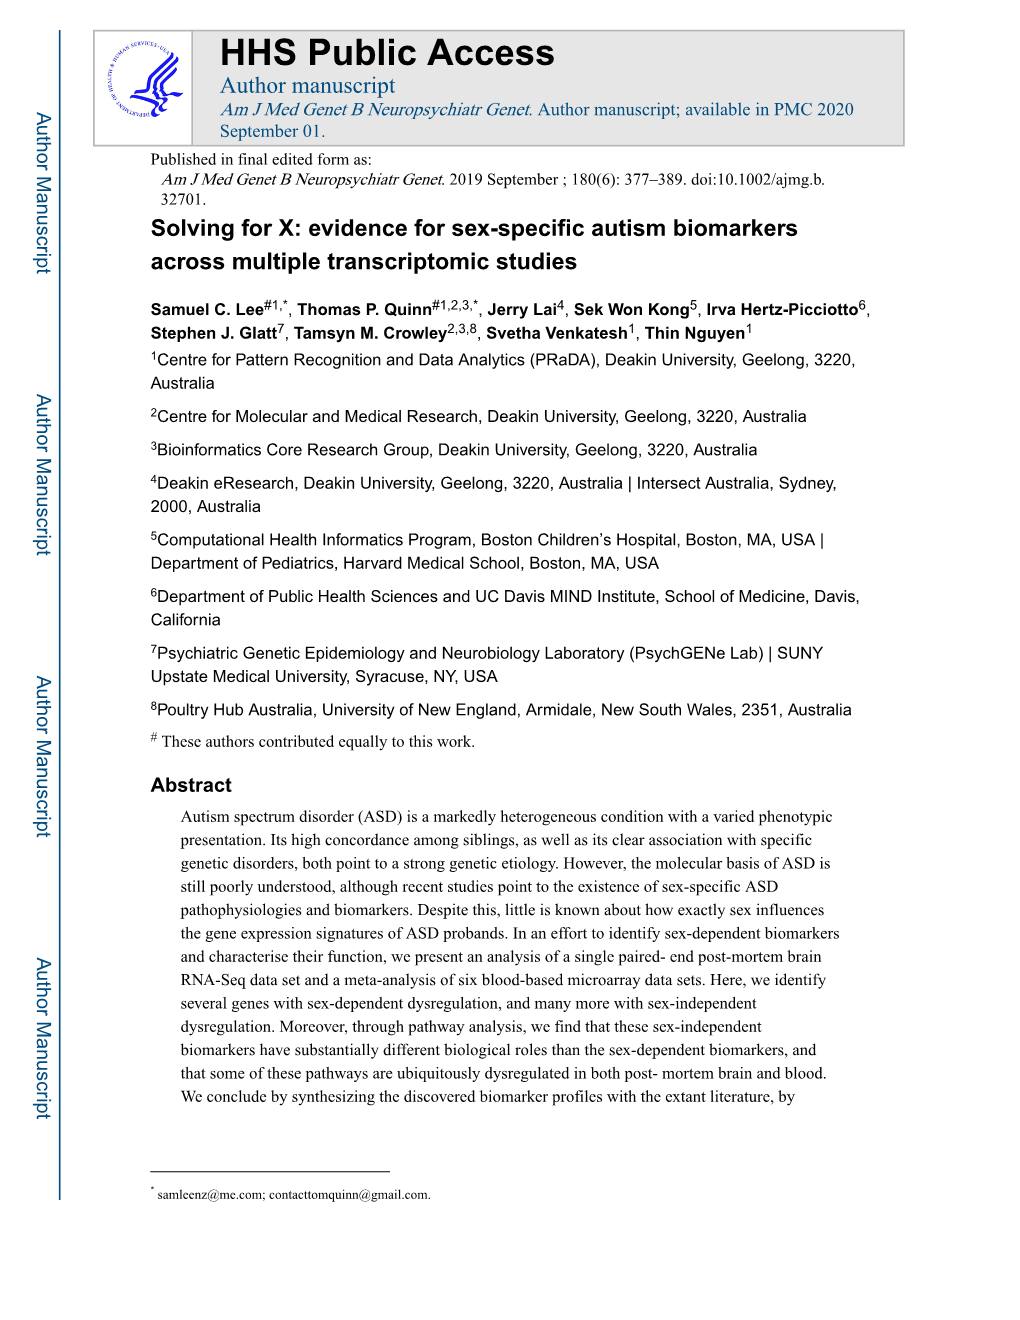 Evidence for Sex-Specific Autism Biomarkers Across Multiple Transcriptomic Studies